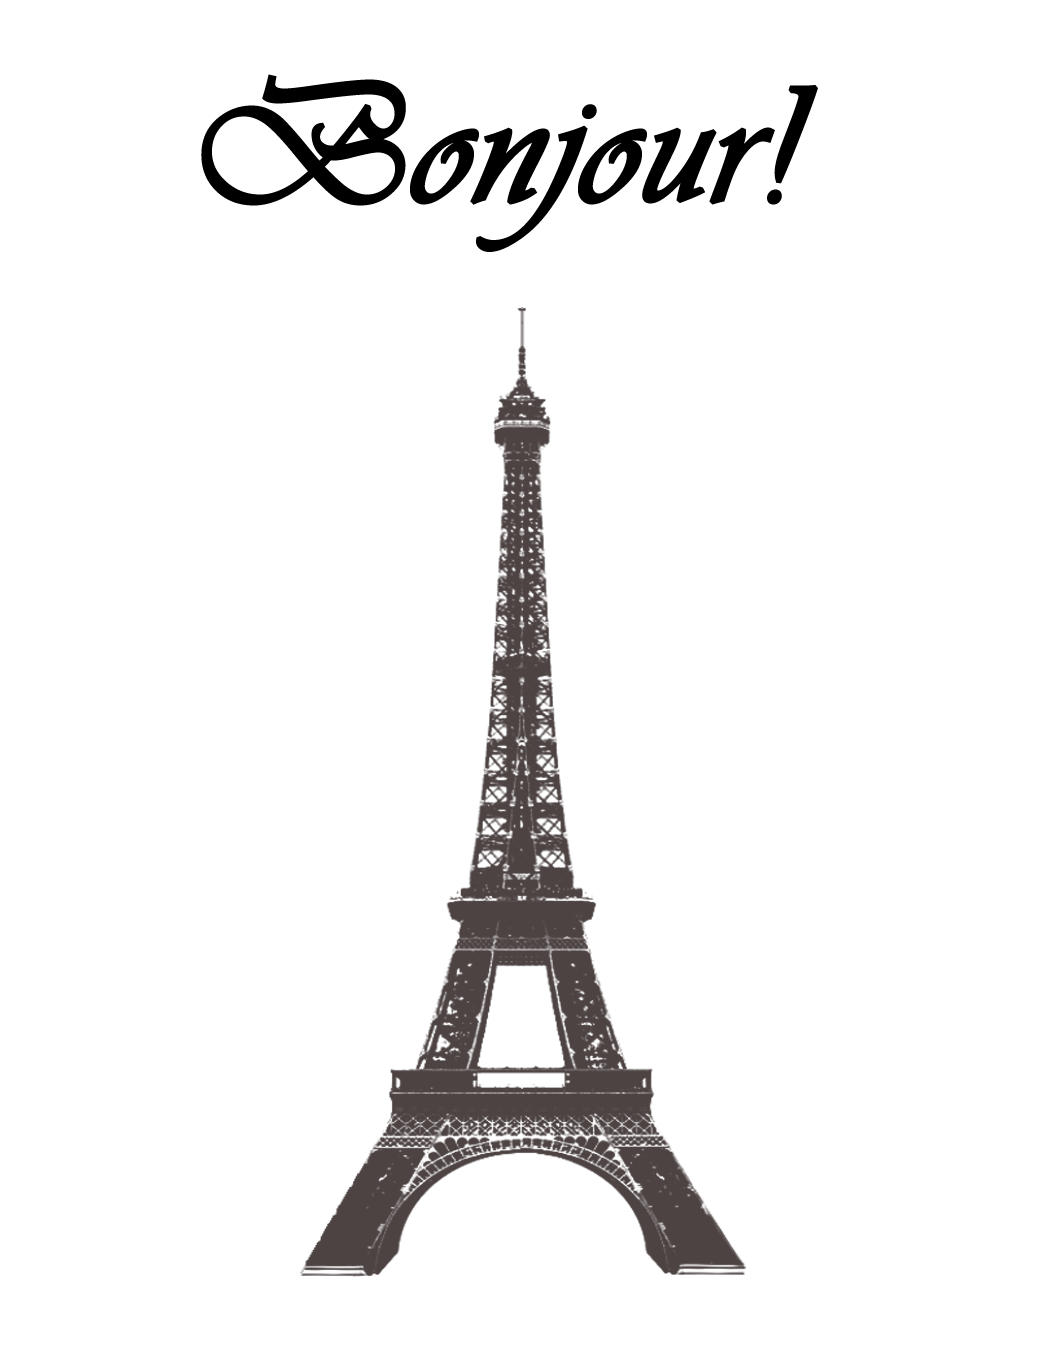 Eiffel Tower City At Night Wallpaper   Clipart Best   Clipart Best